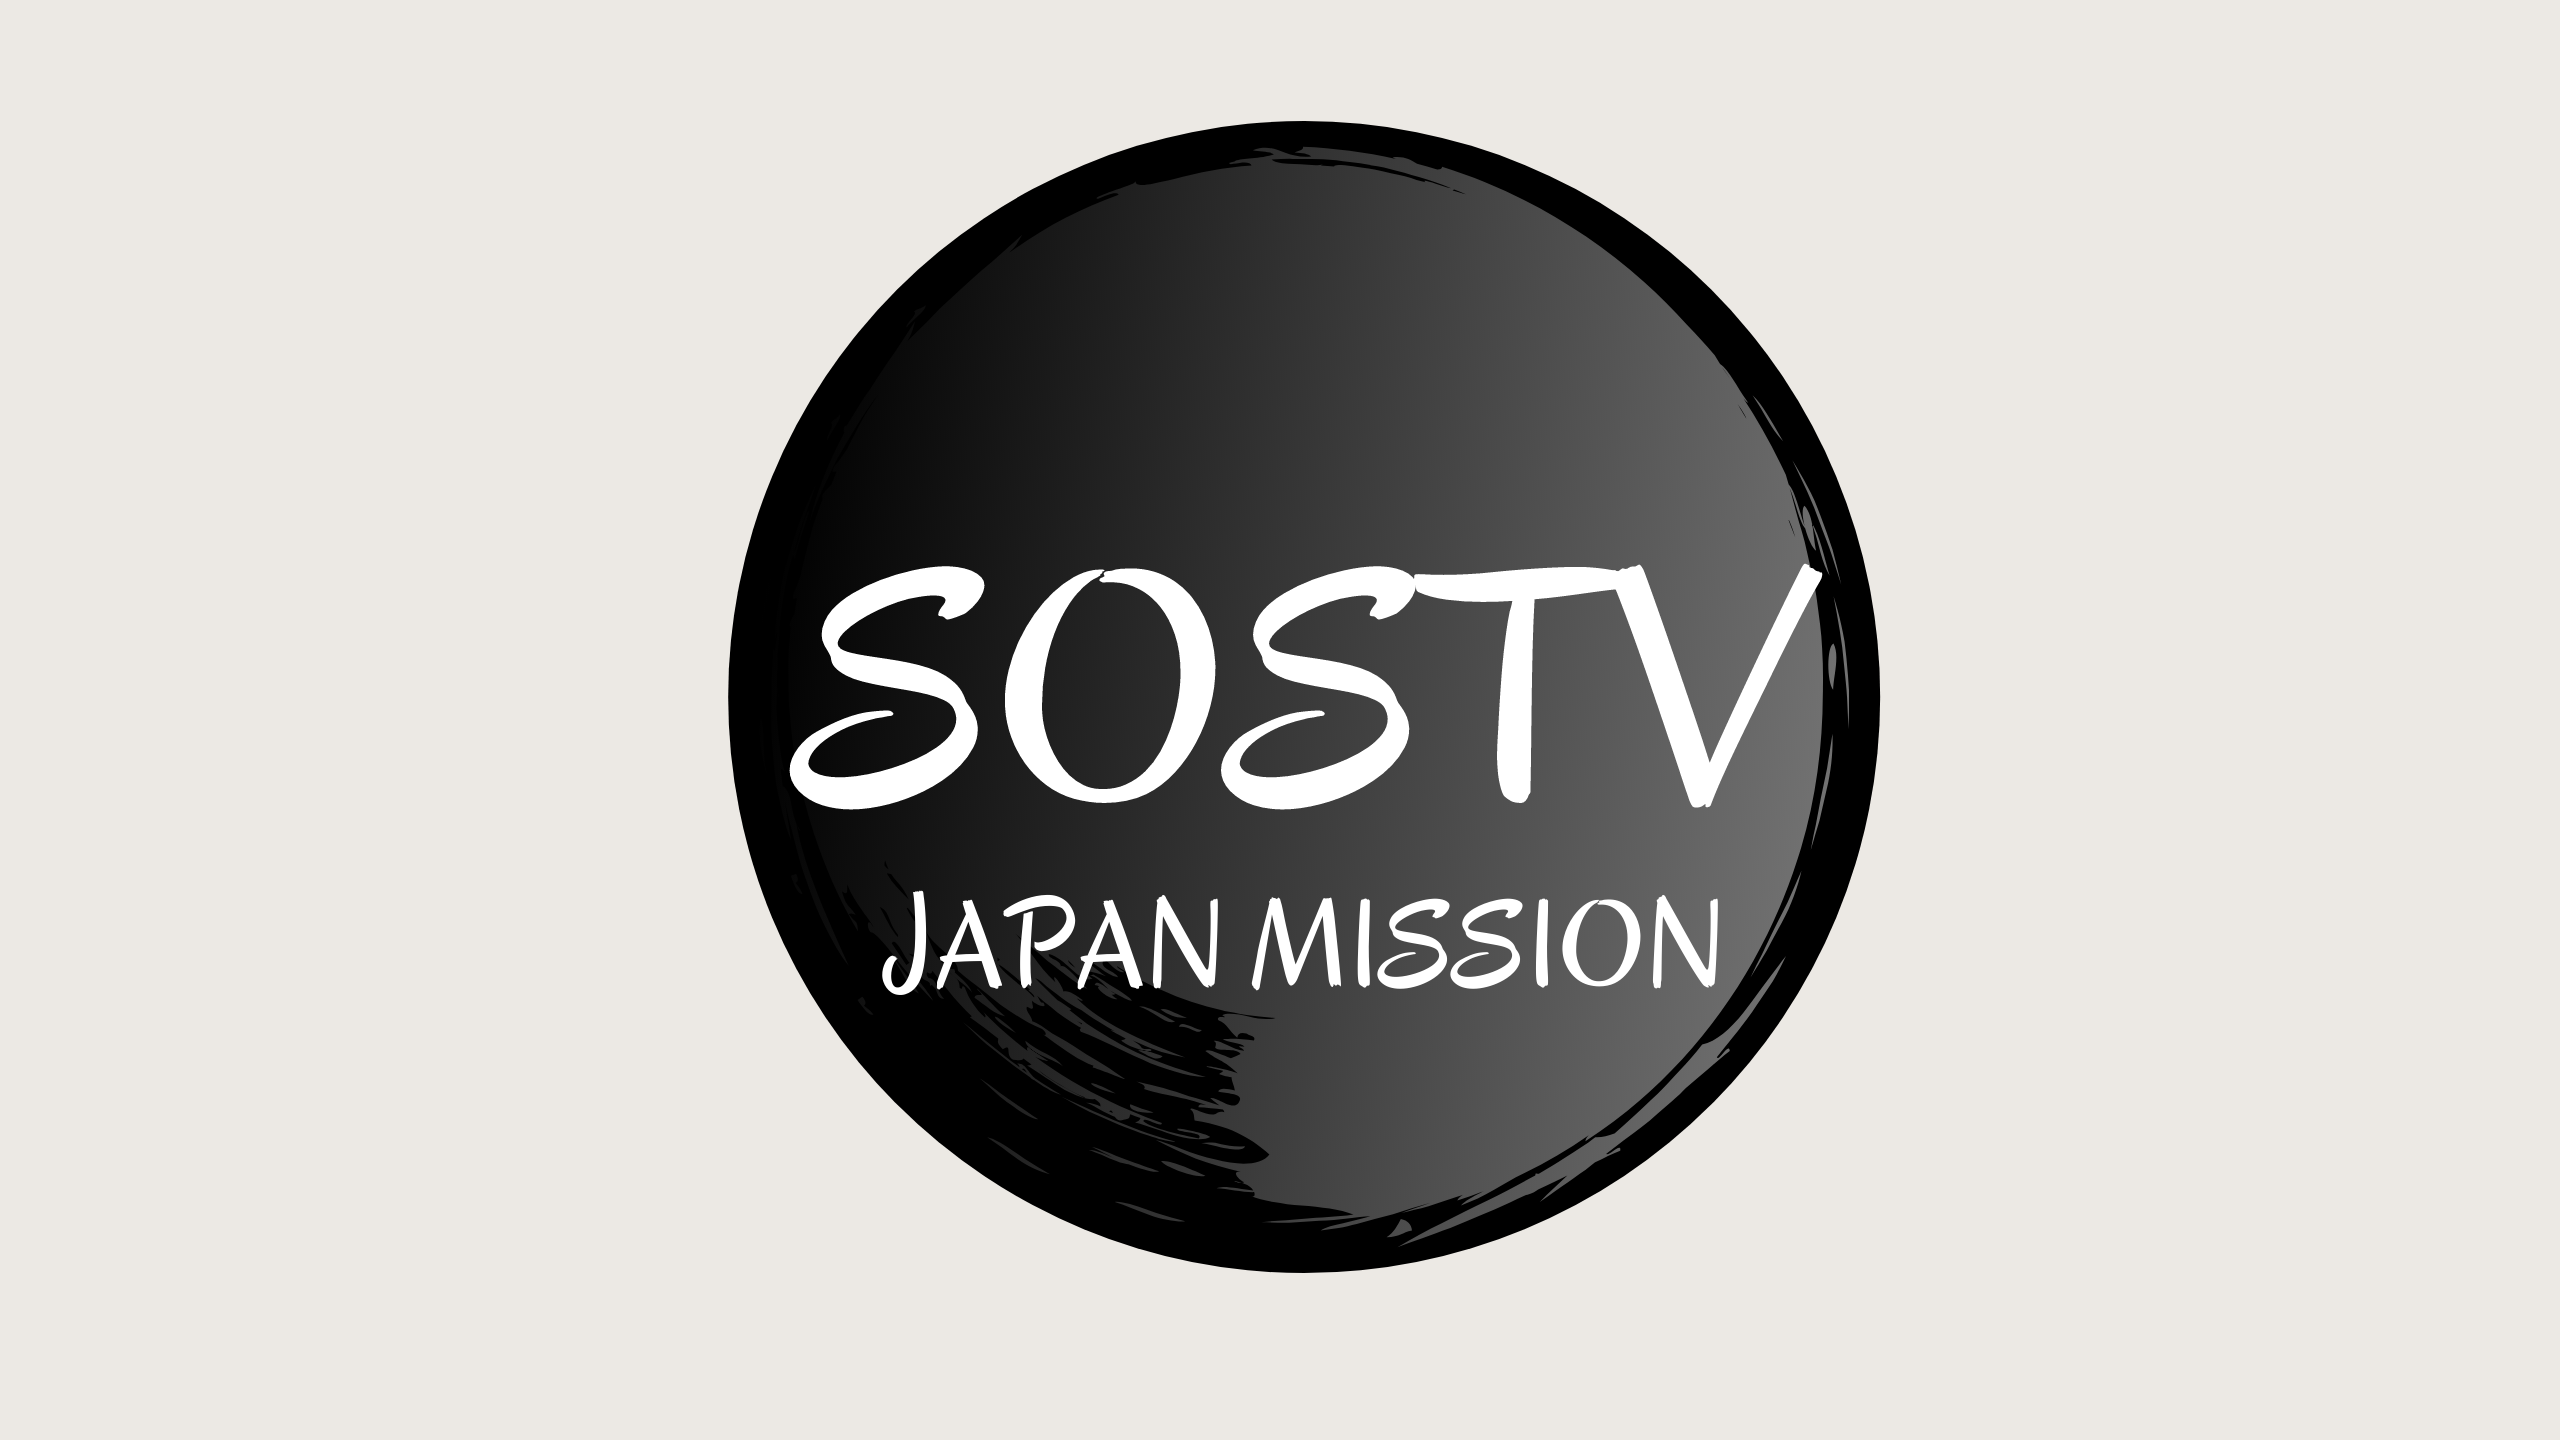 SOSTV Japan Mission logo